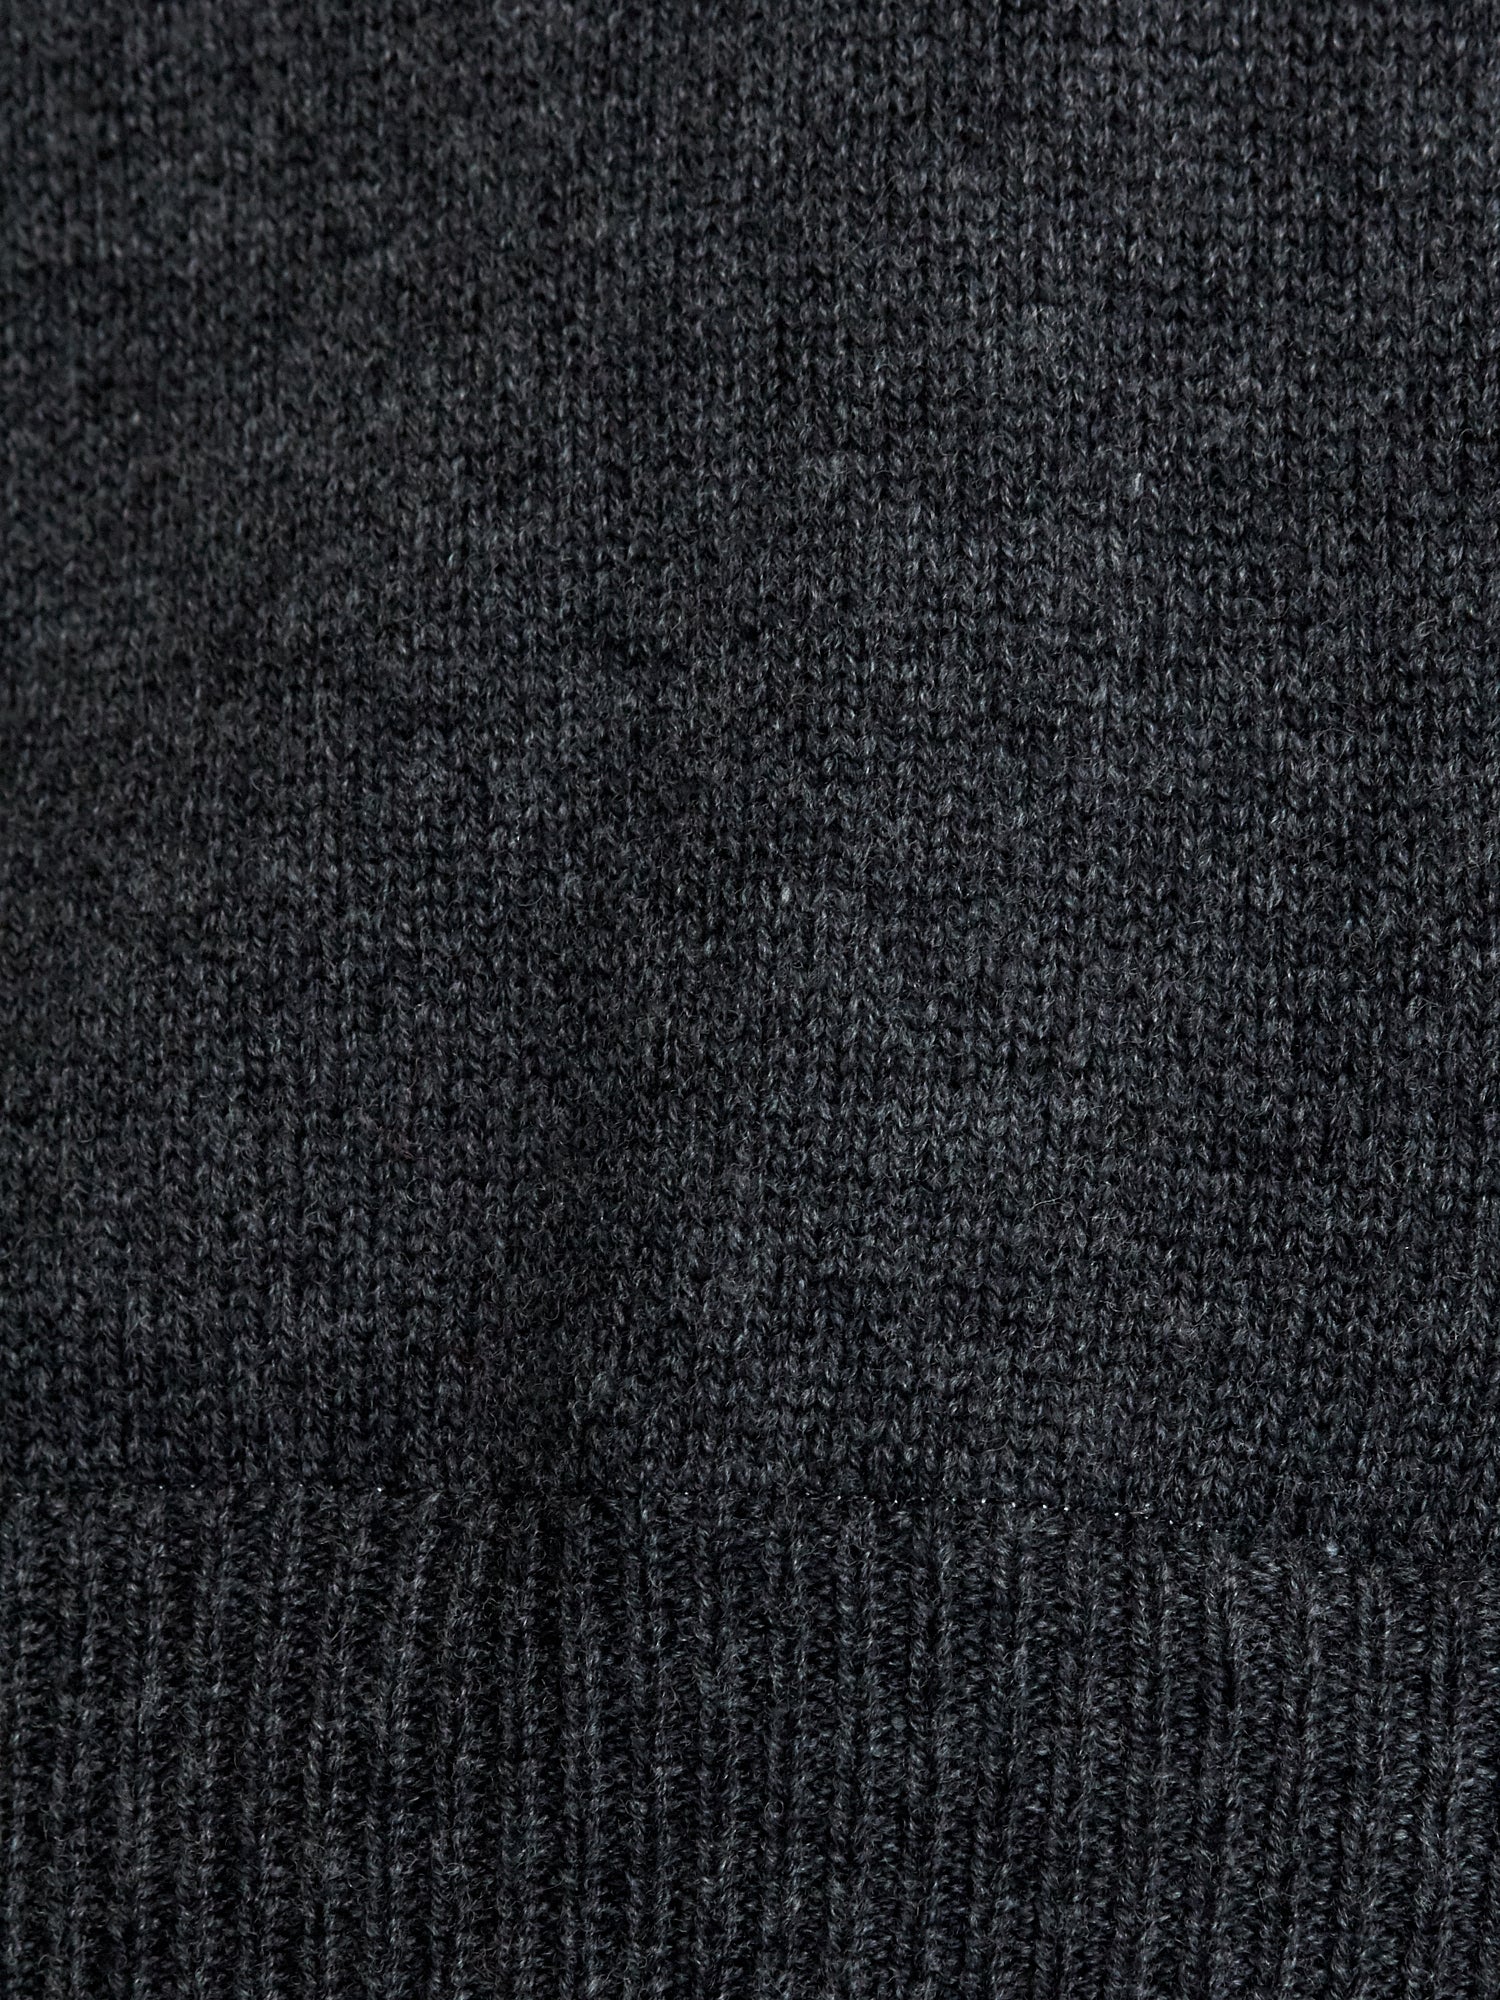 Looker dark grey layered v-neck sweater close up